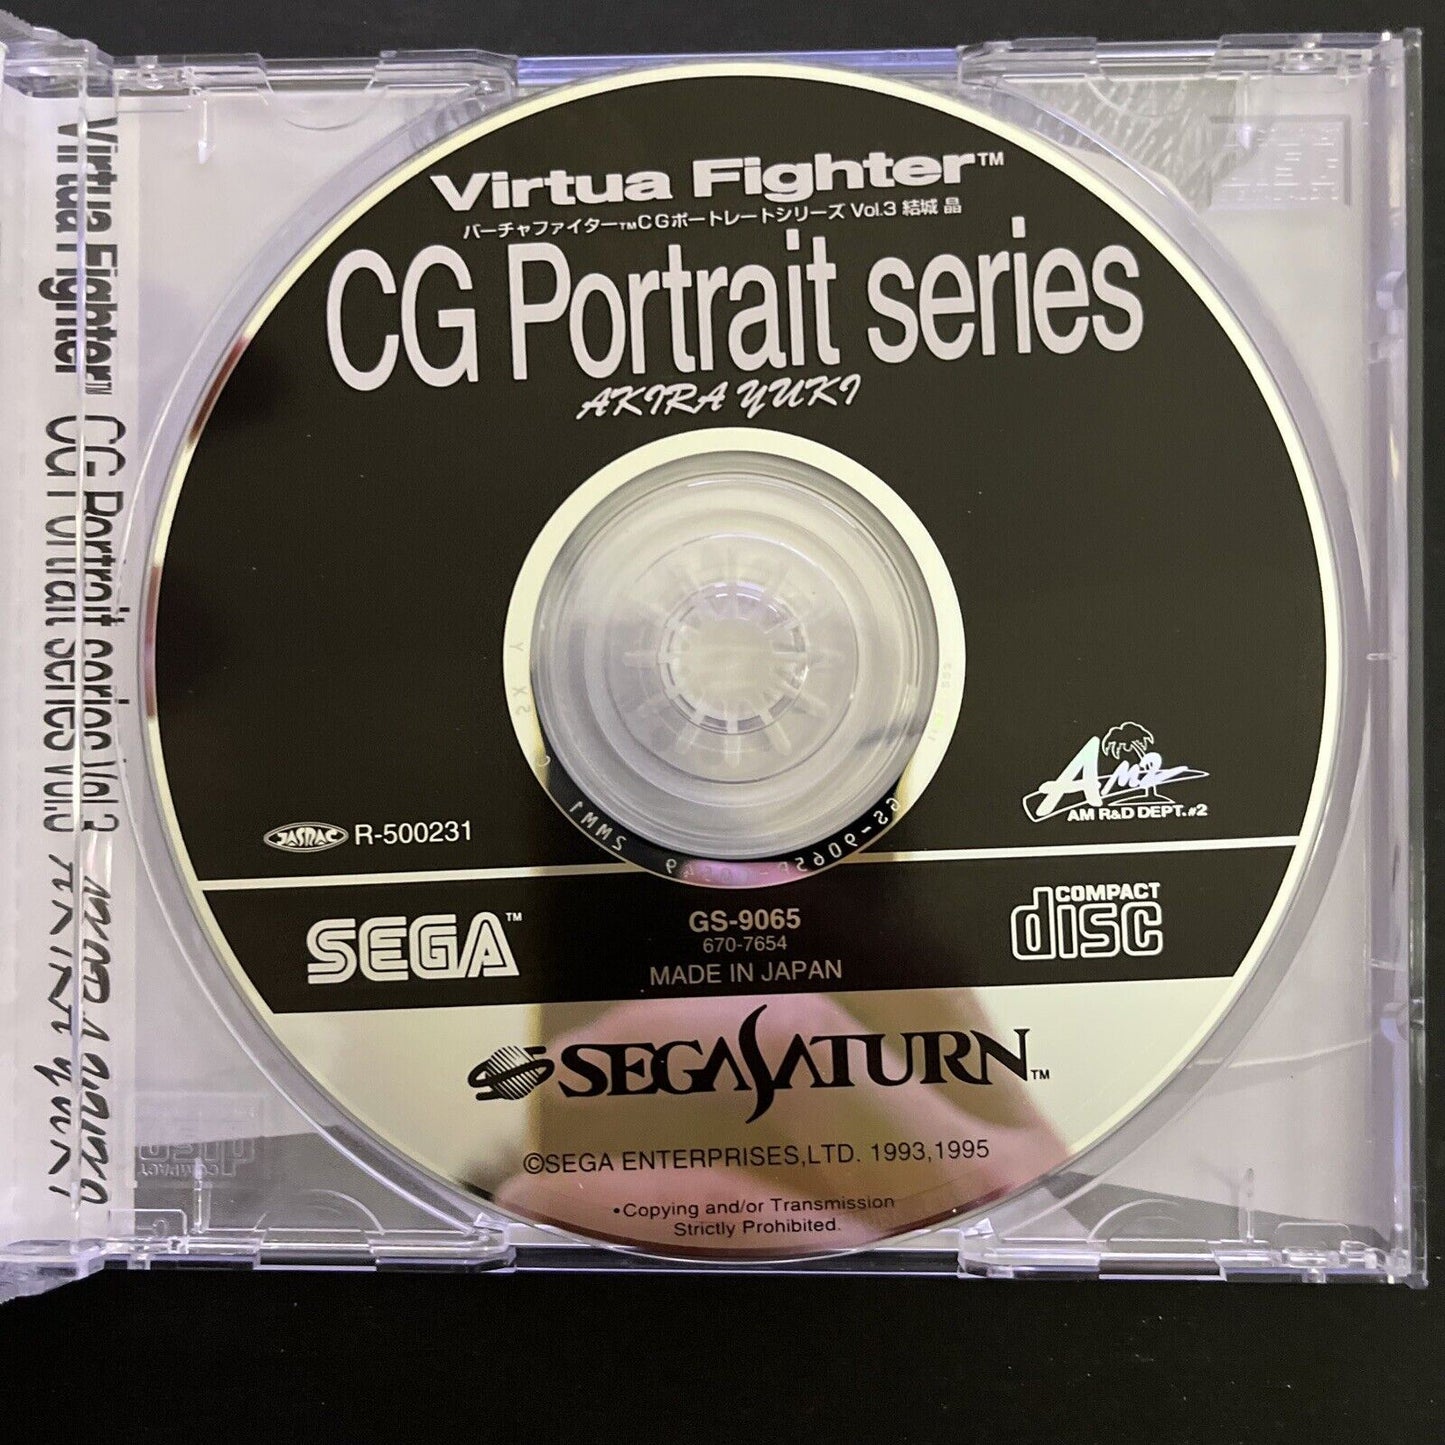 Virtua Fighter CD Portrait Series Akira Yuki - Sega Saturn NTSC-J JAPAN 1995